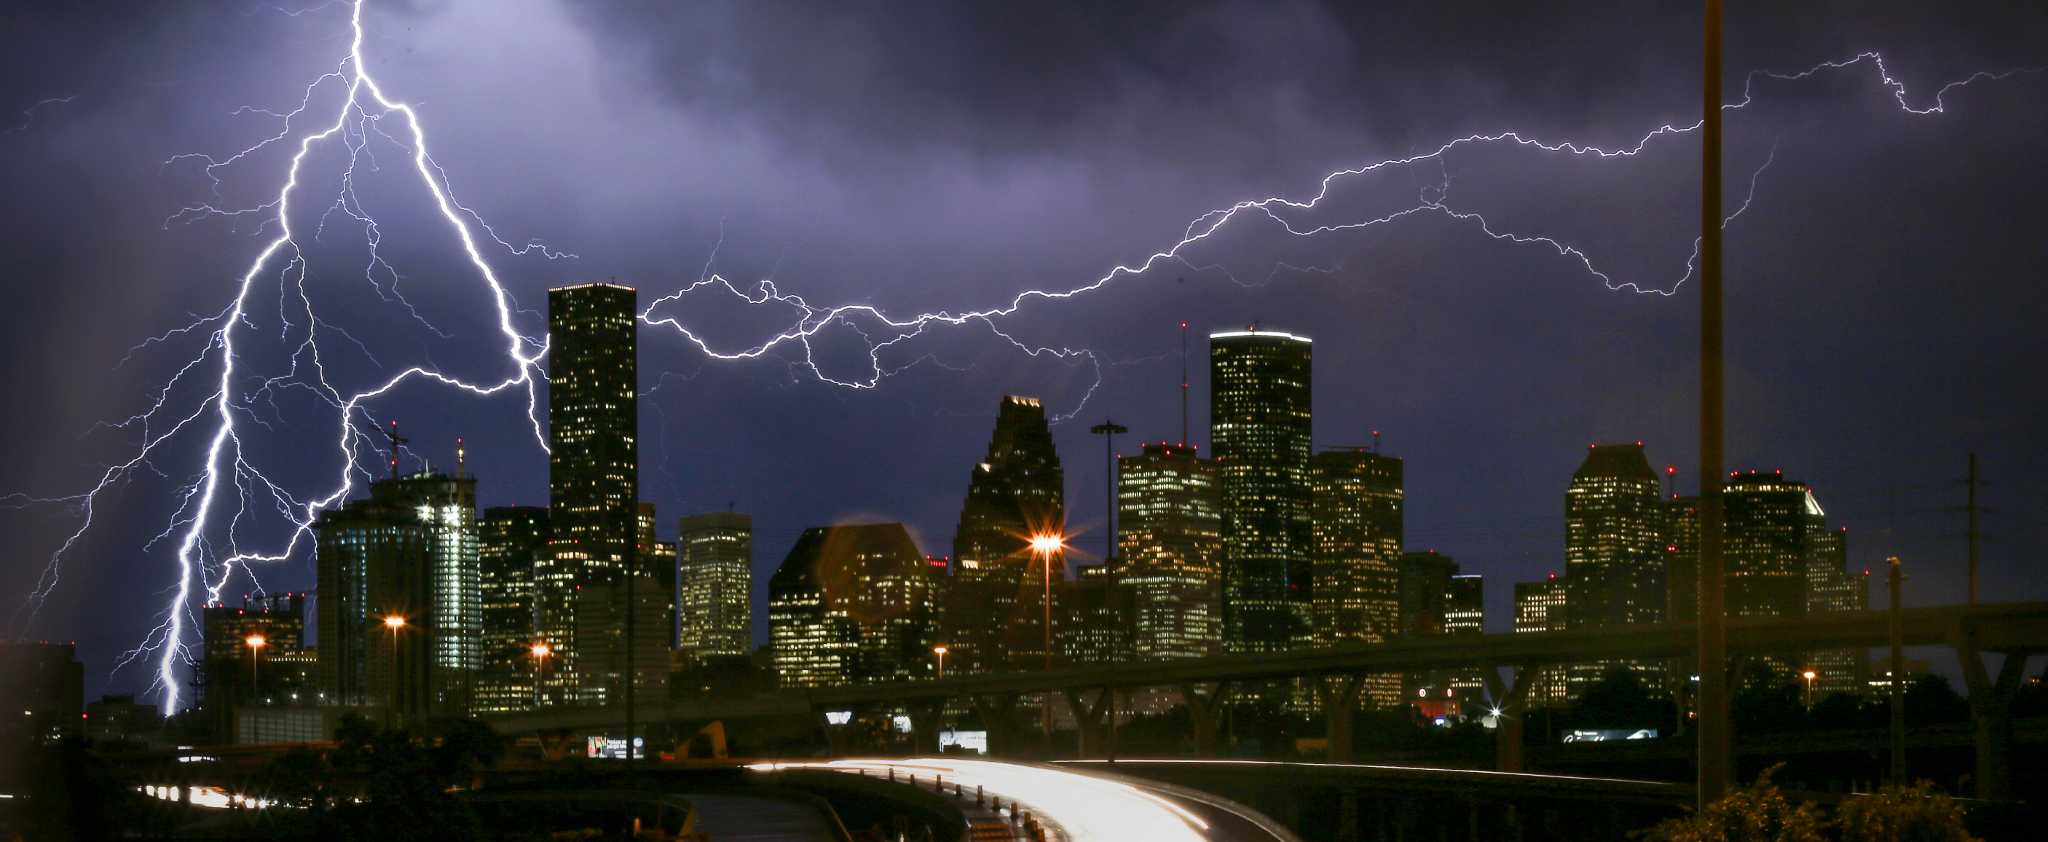 Severe thunderstorms, rain could start hitting Houston Tuesday night - Houston Chronicle2048 x 842